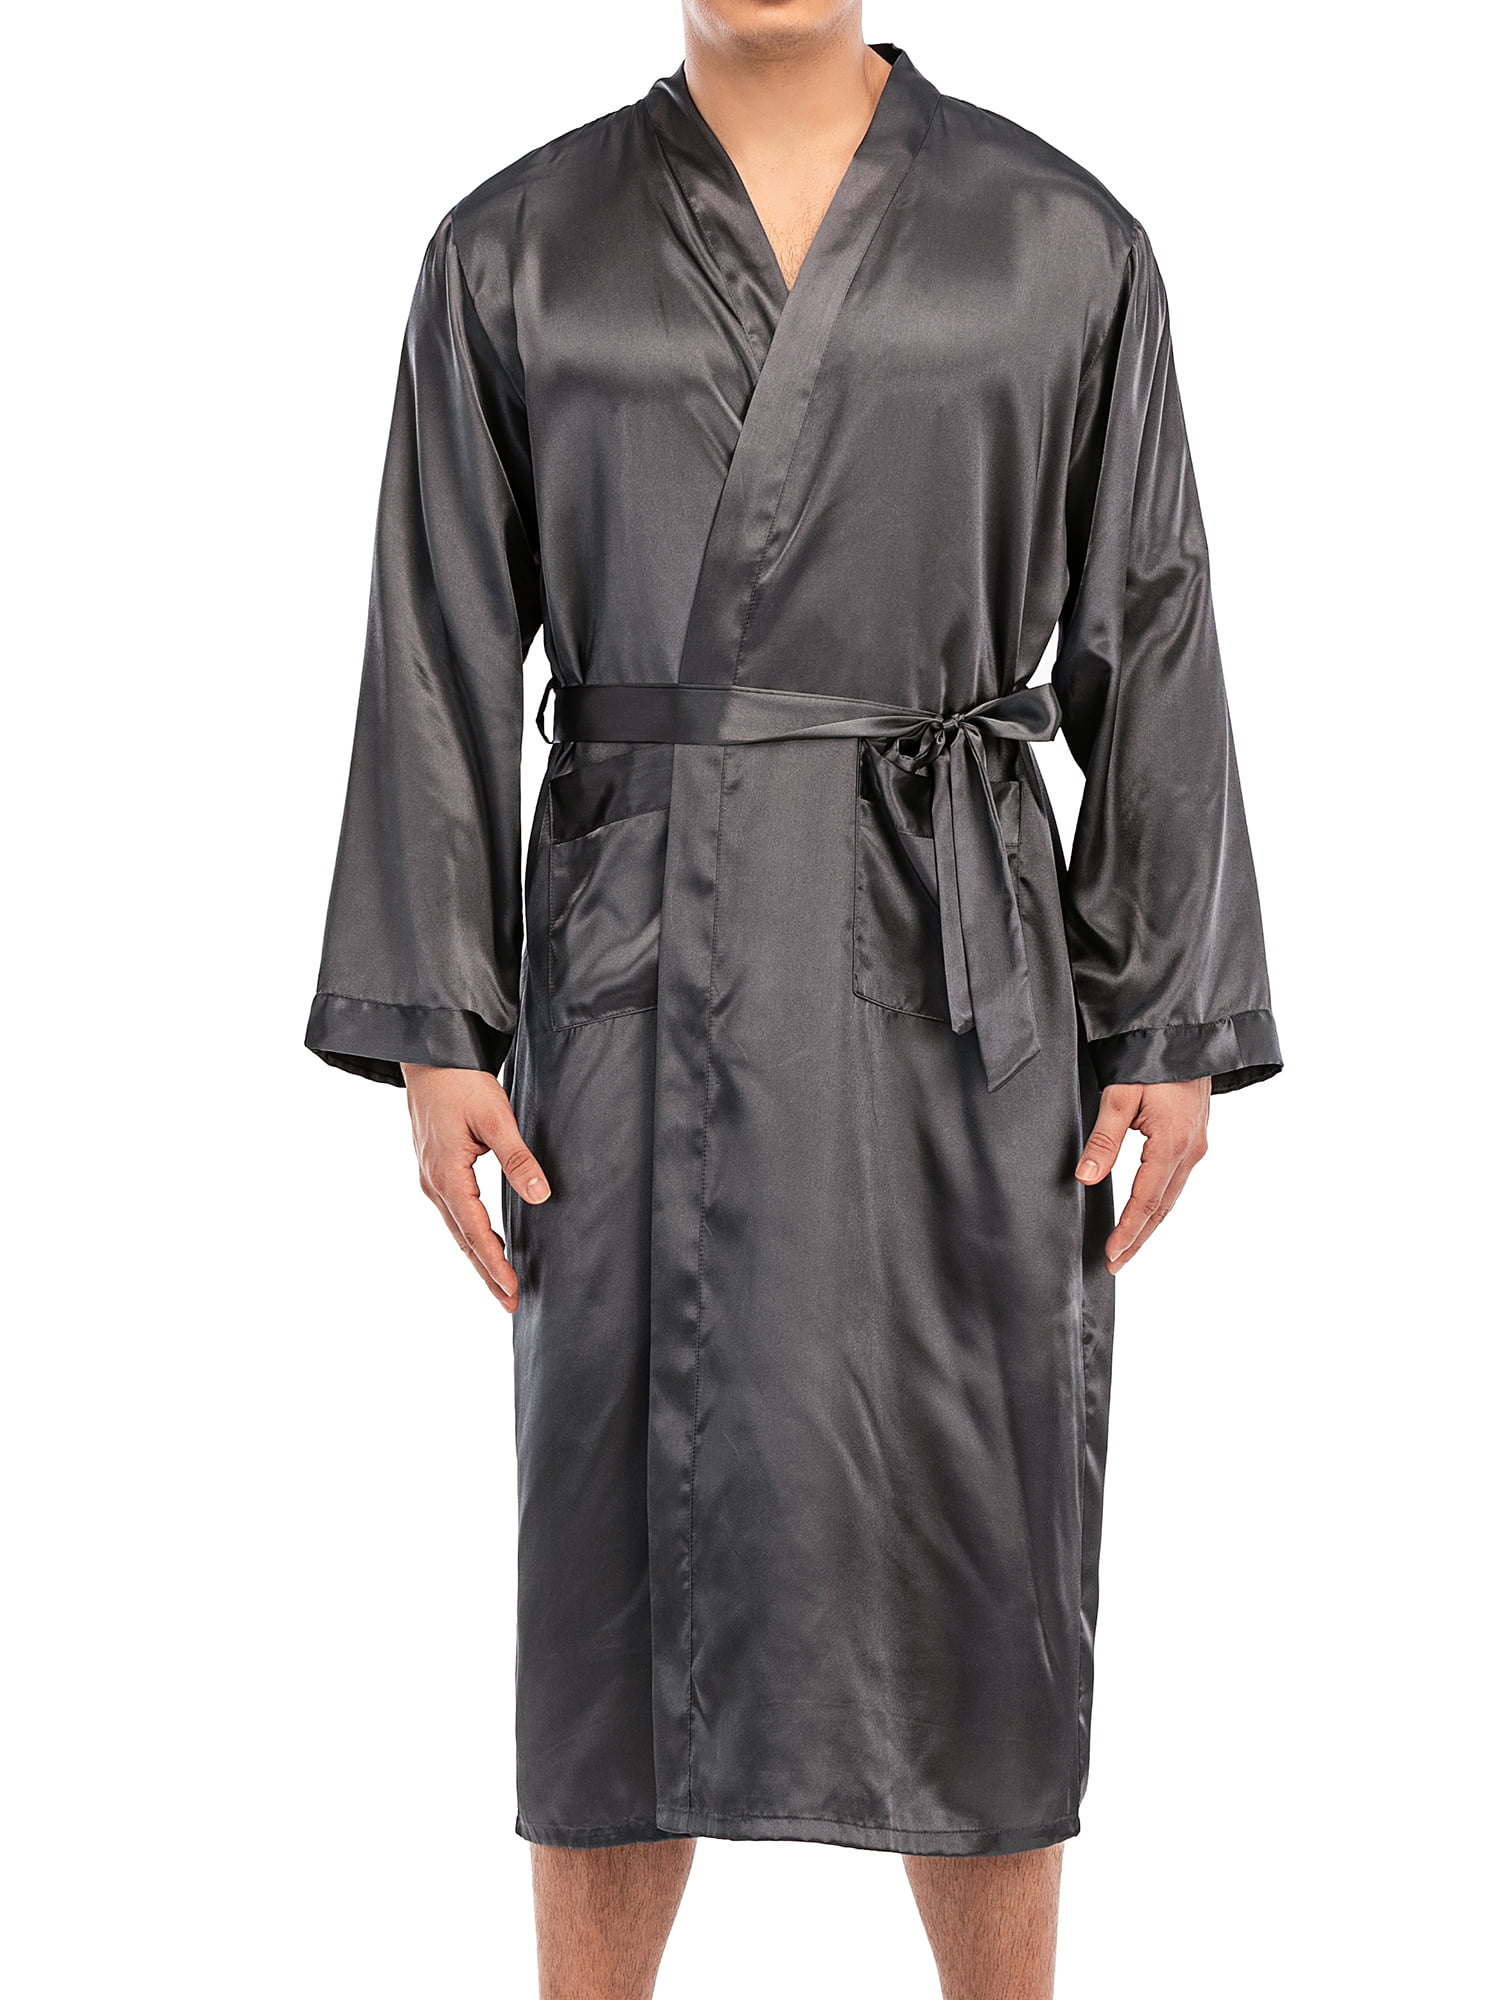 Dodoing - Men's Pajamas Bathrobe Nightgown Casual Kimono Robe ...